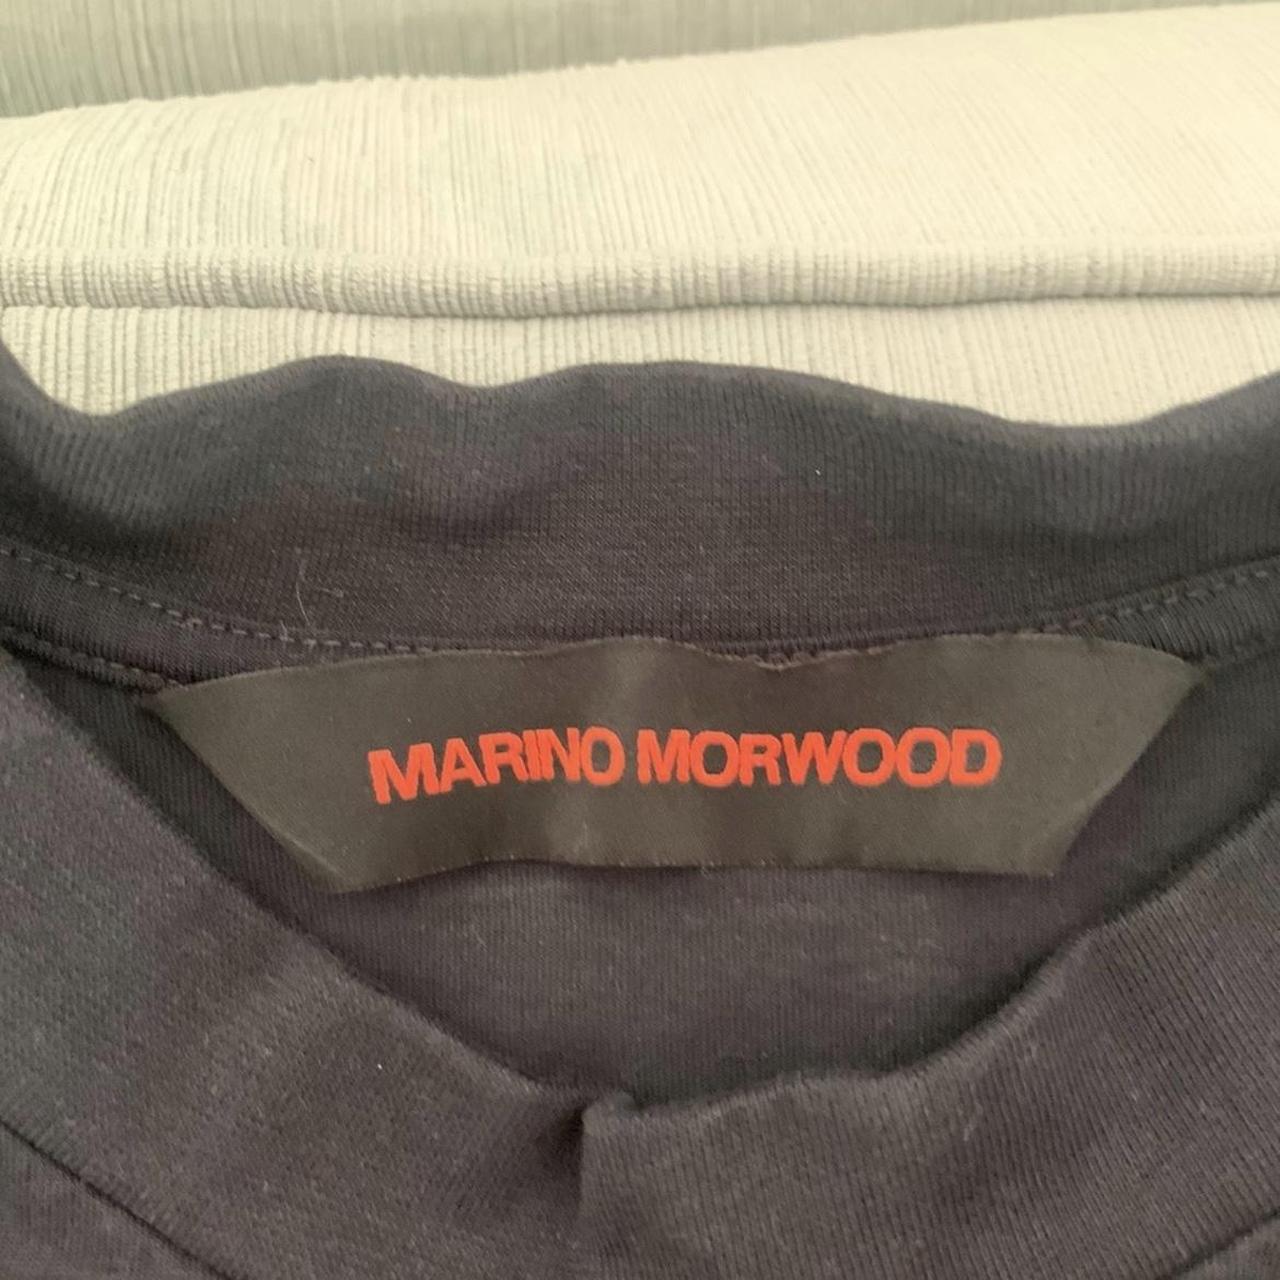 Marino Morwood Chicago Bulls T-Shirt - Depop